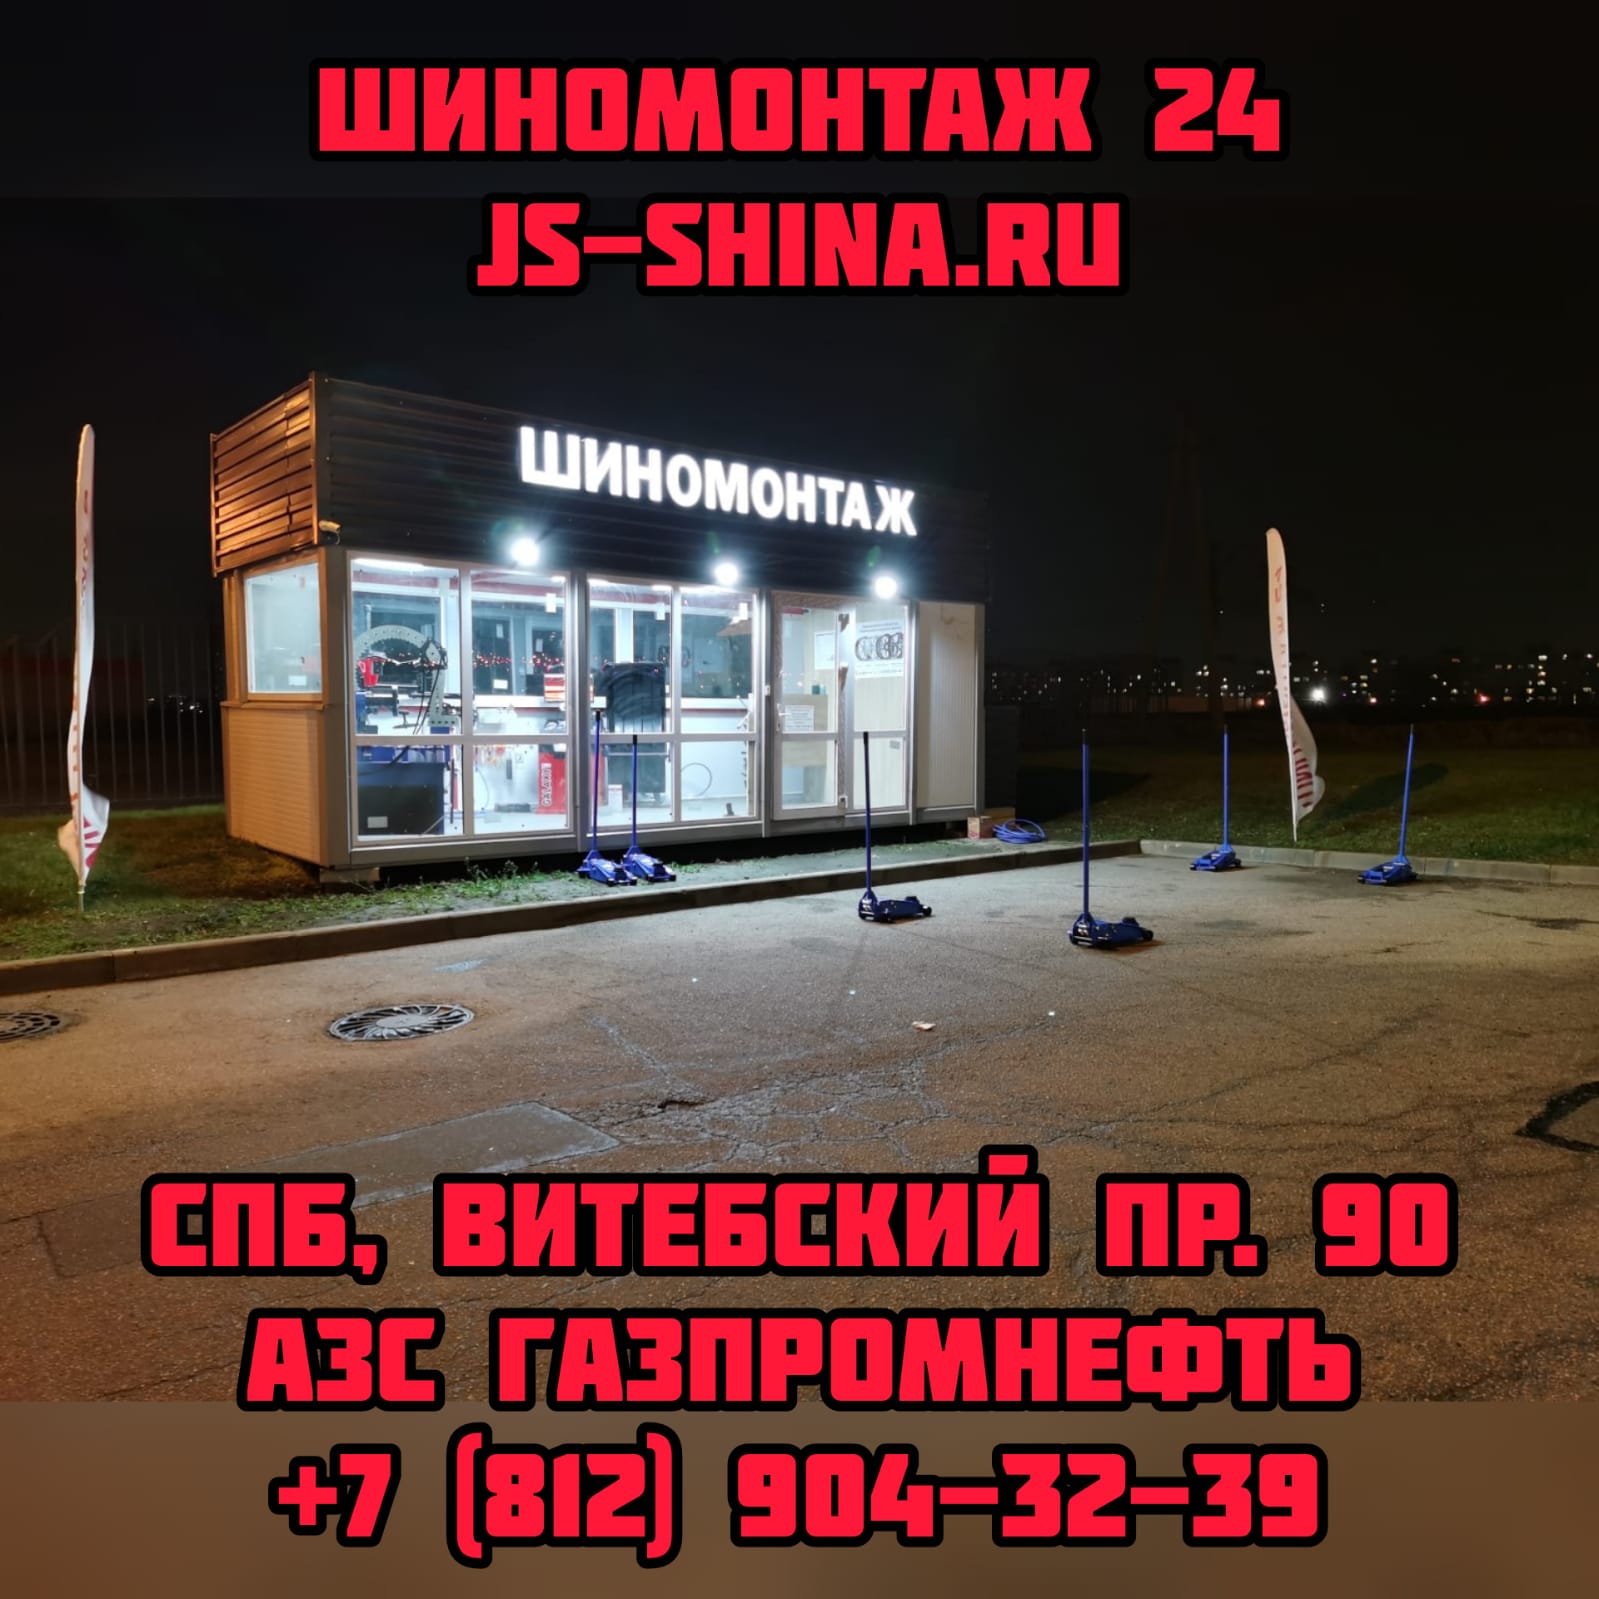 Шиномонтаж 24 часа js-shina в Санкт-Петербурге Витебский пр. 90  ремонт дисков